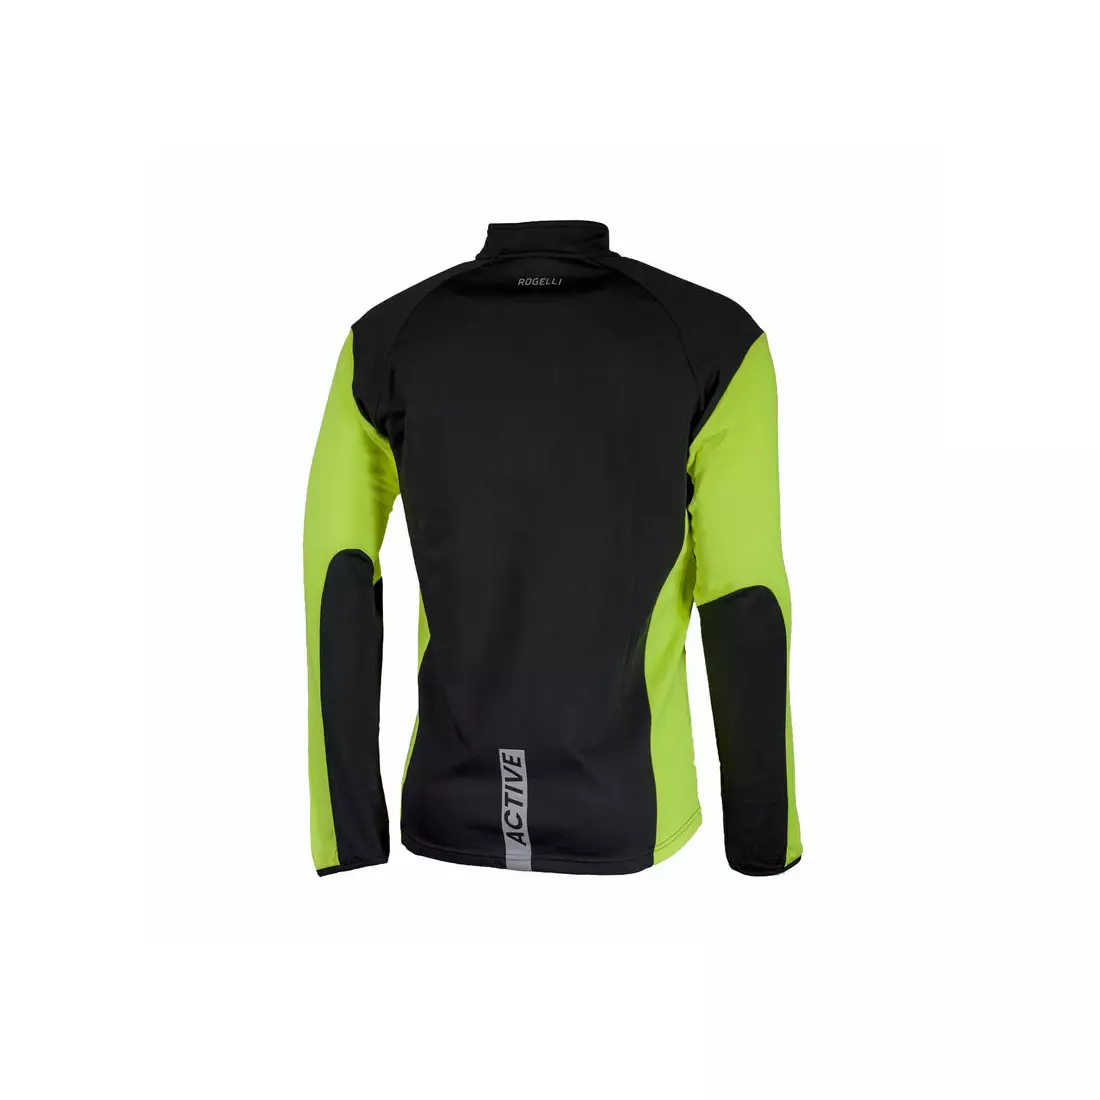 ROGELLI RUN - DILLON - lekko ocieplana męska bluza biegowa, kolor: Czarno-fluorowy